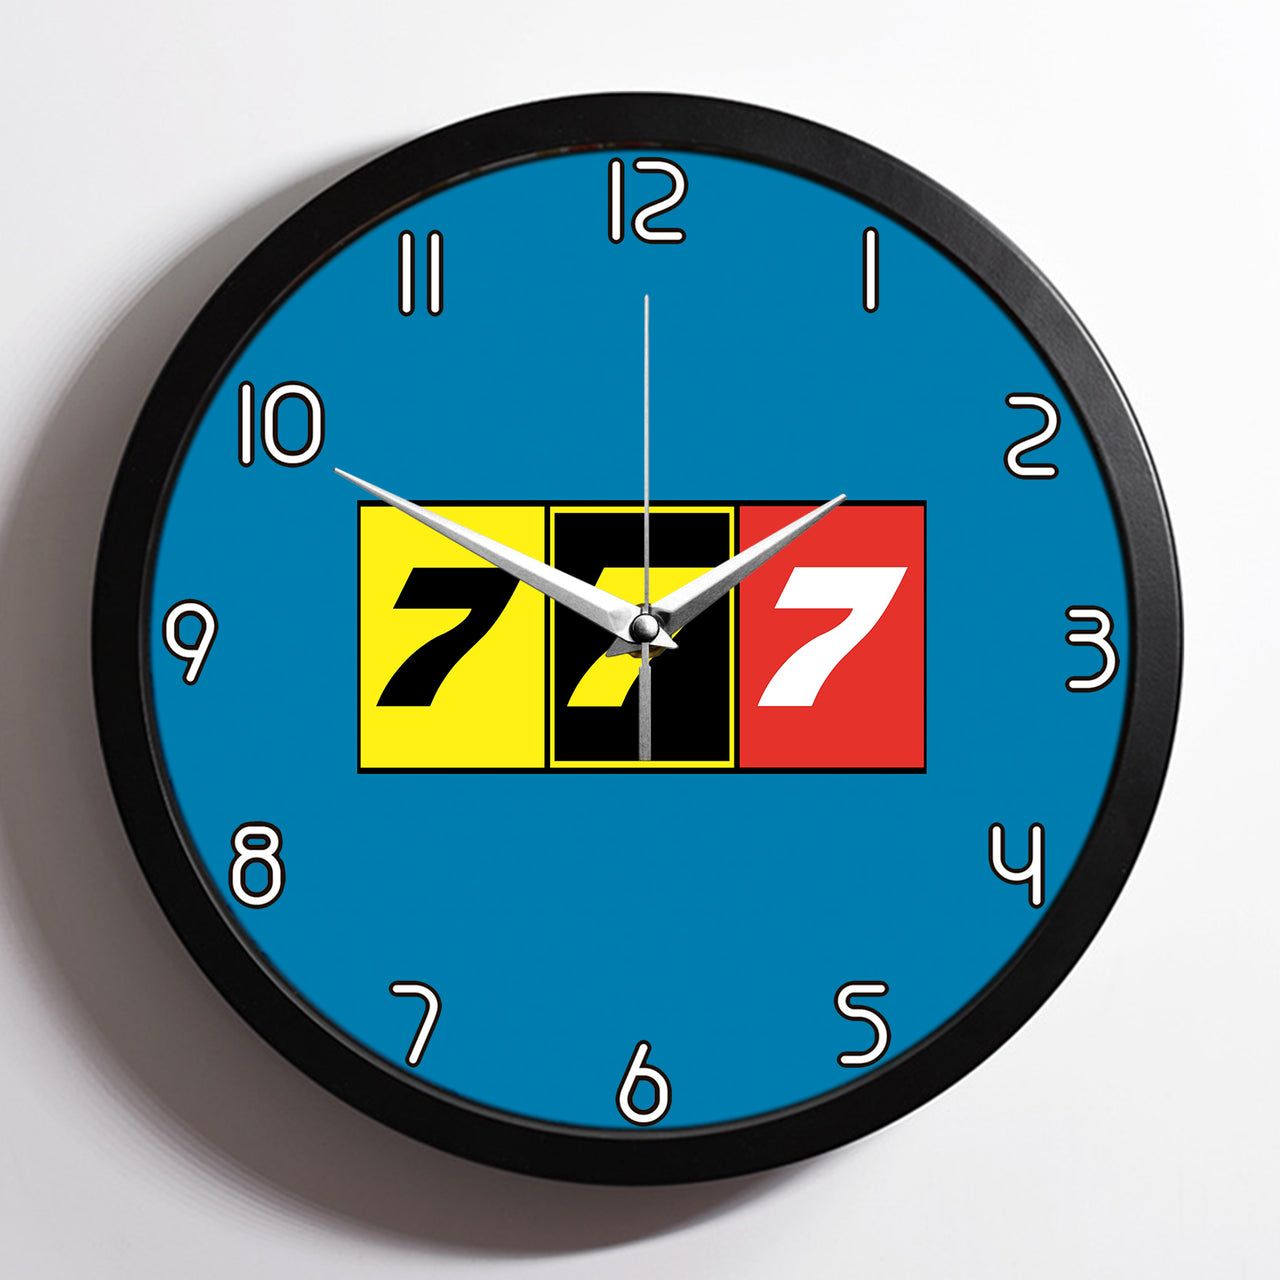 Flat Colourful 777 Designed Wall Clocks